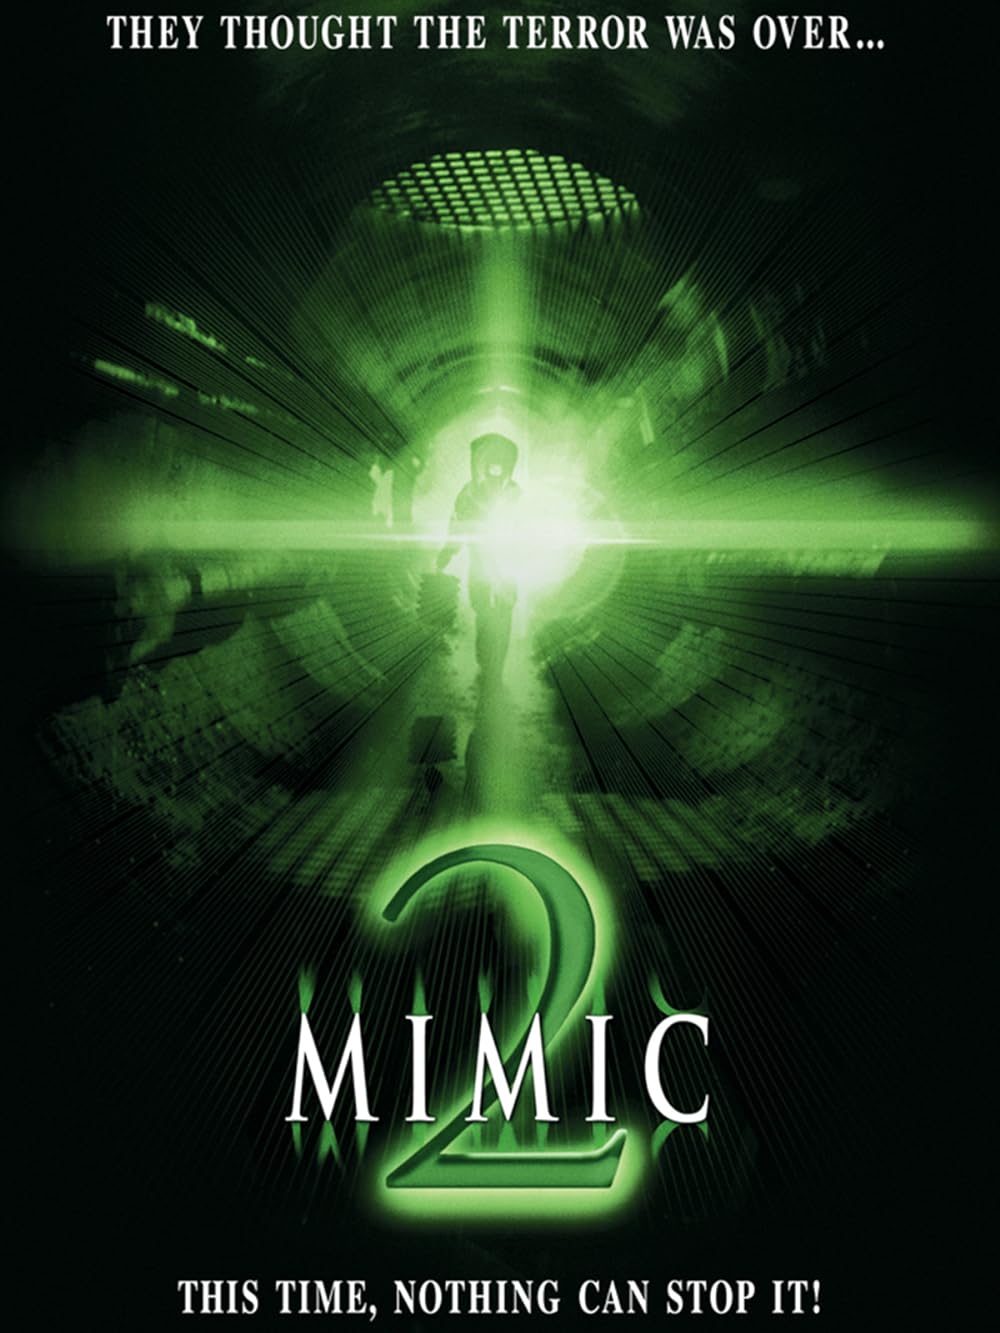 Mimic 2 (2001) 448Kbps 23.976Fps 48Khz 5.1Ch DVD Turkish Audio TAC